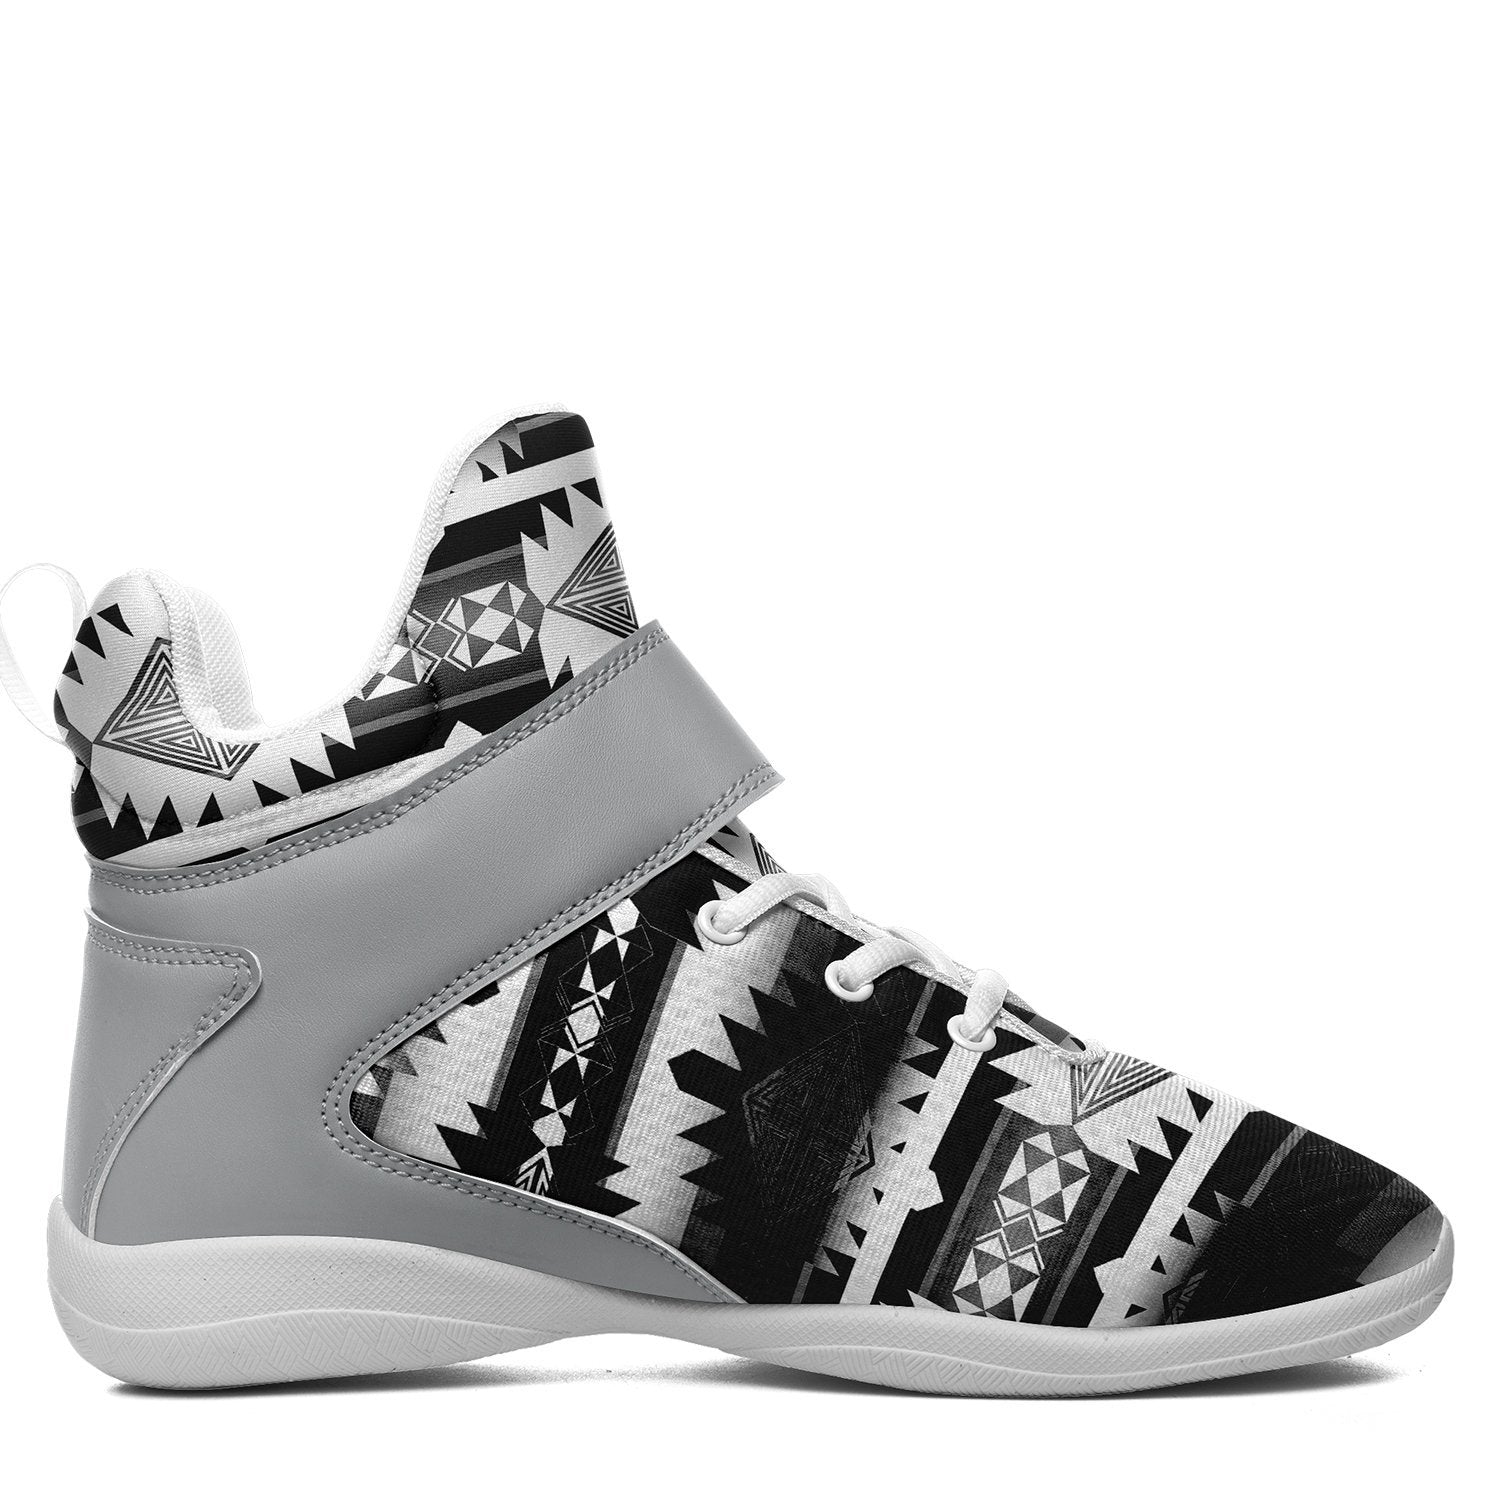 Okotoks Black and White Ipottaa Basketball / Sport High Top Shoes - White Sole 49 Dzine 